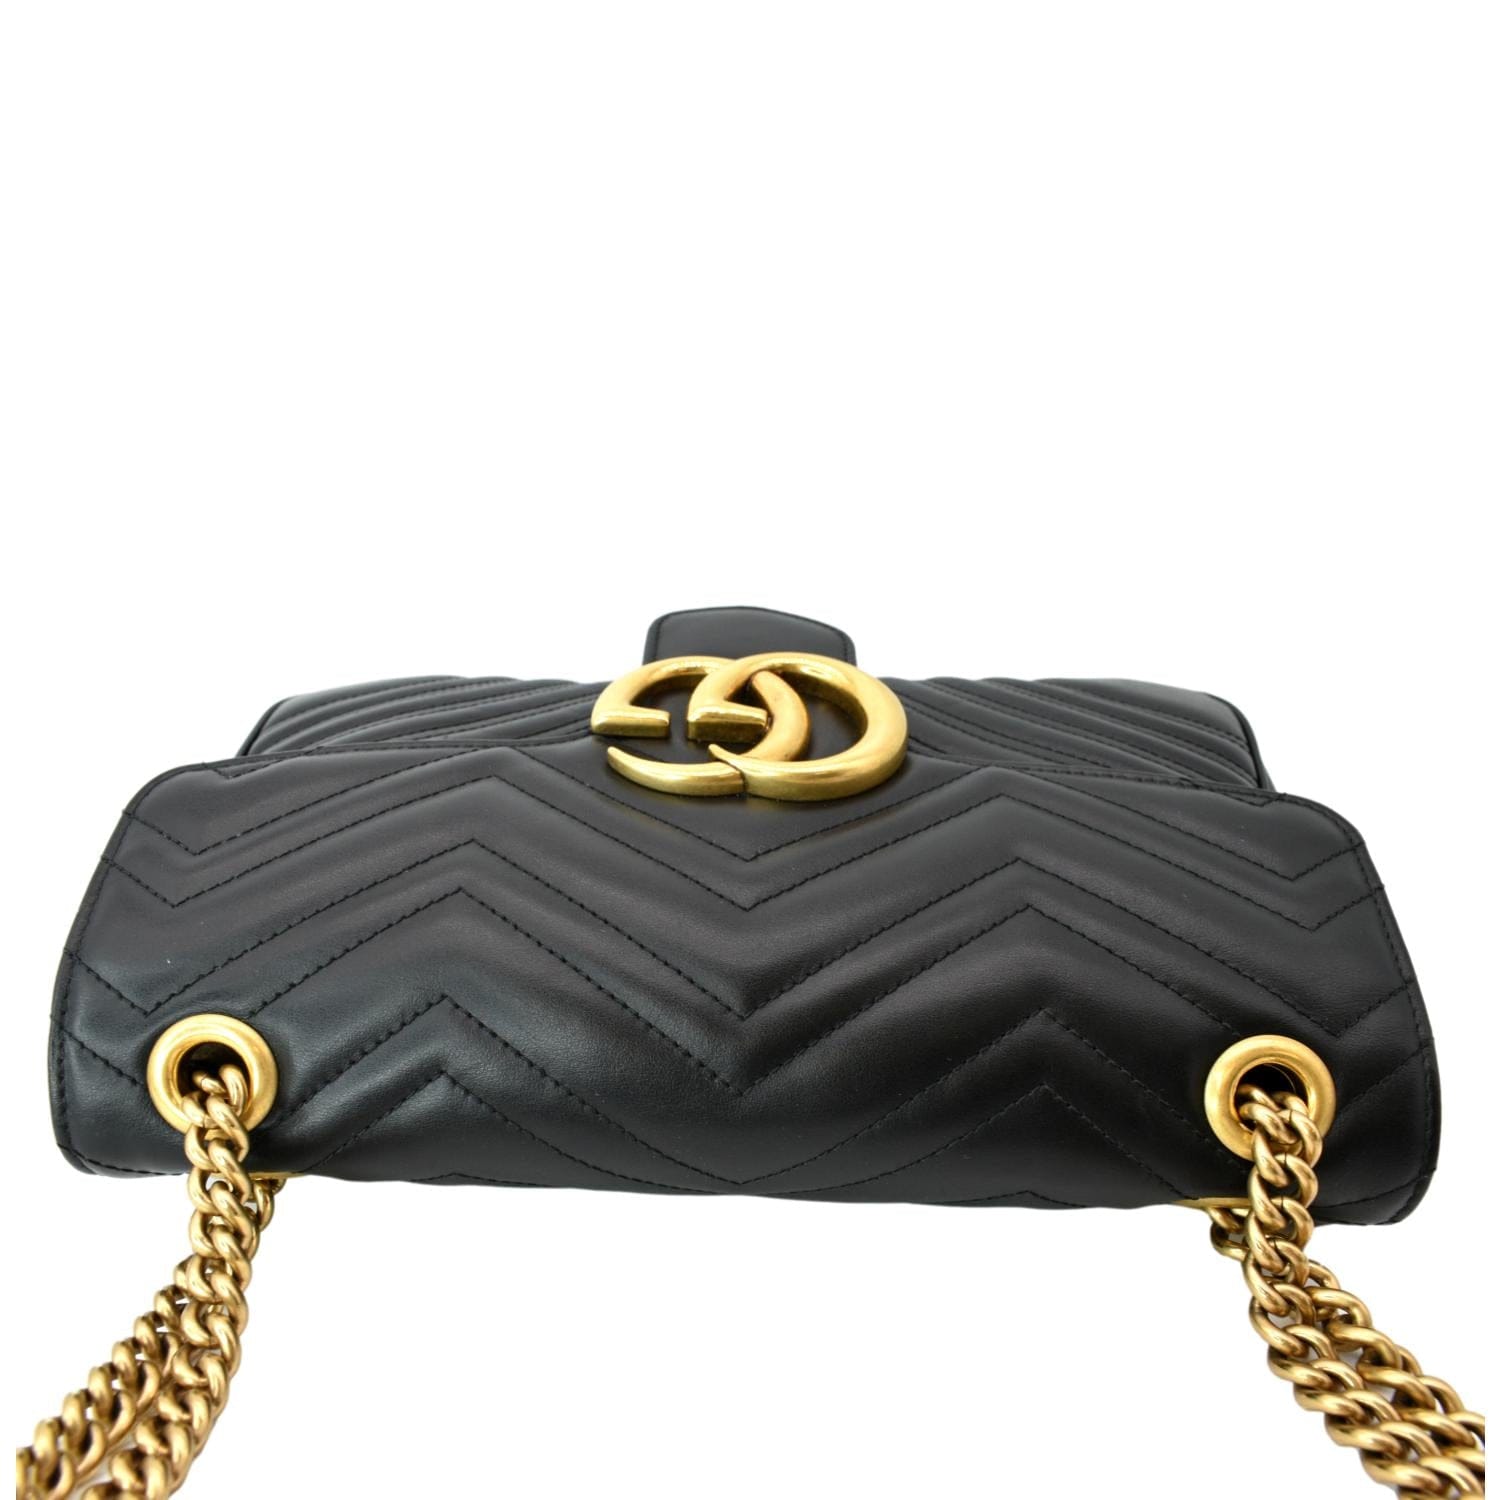 Gucci GG Marmont Medium Wallet